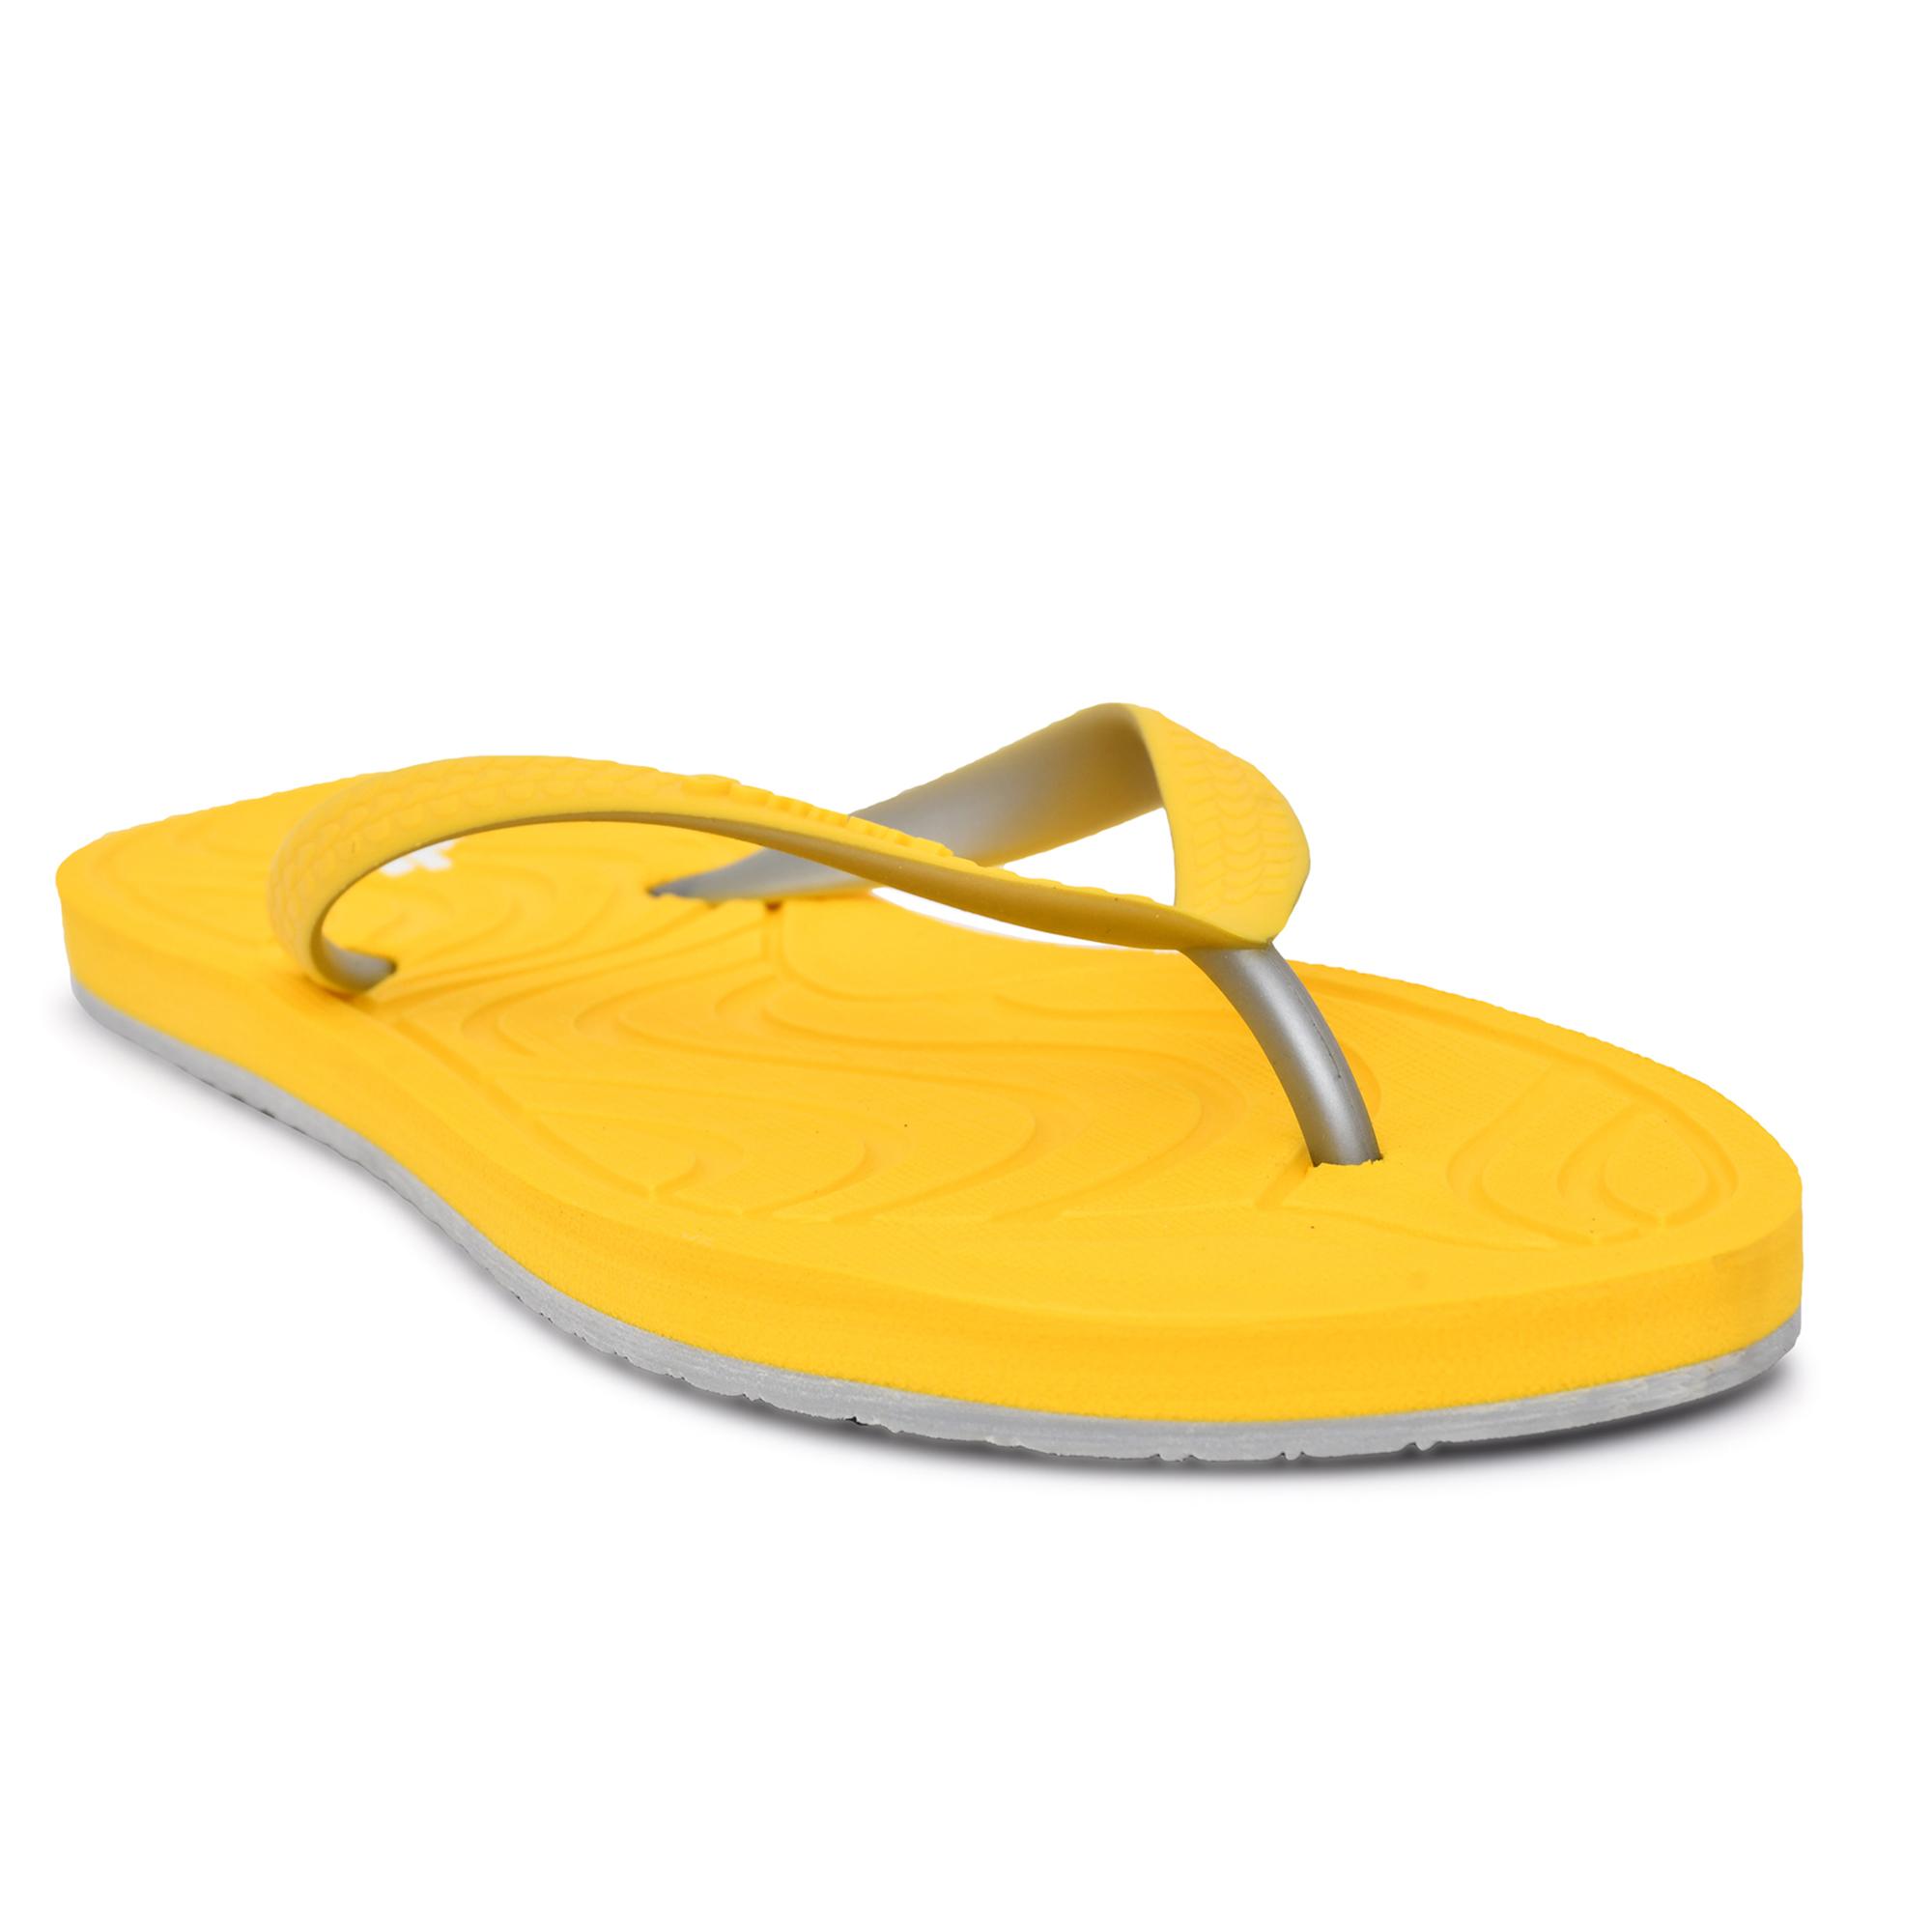 Bonkerz Orange Slippers - Buy Bonkerz Orange Slippers Online at Best Prices  in India on Snapdeal